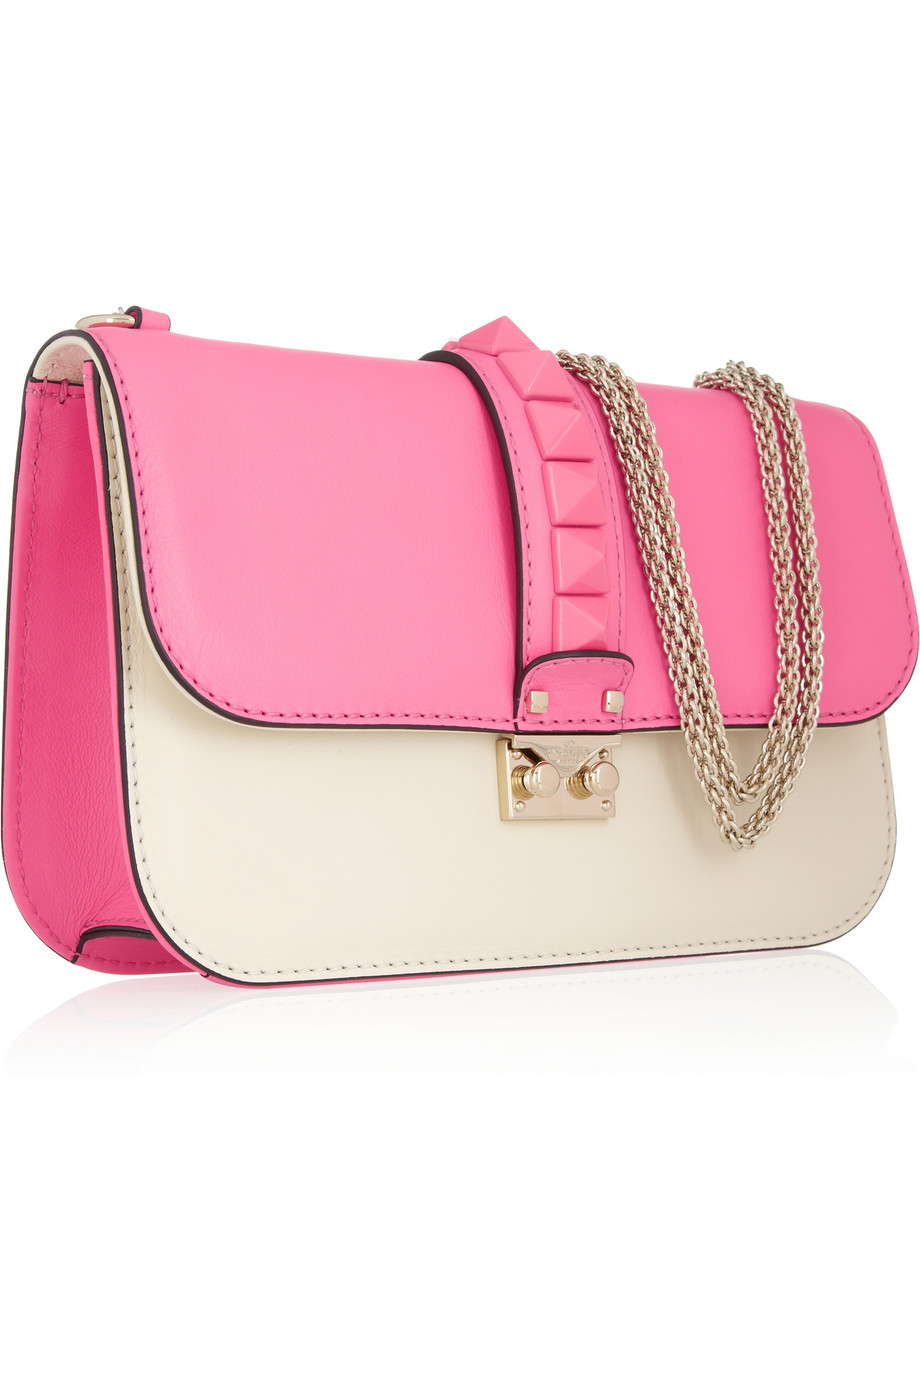 Lyst - Valentino Glam Lock Studded Leather Shoulder Bag in Pink